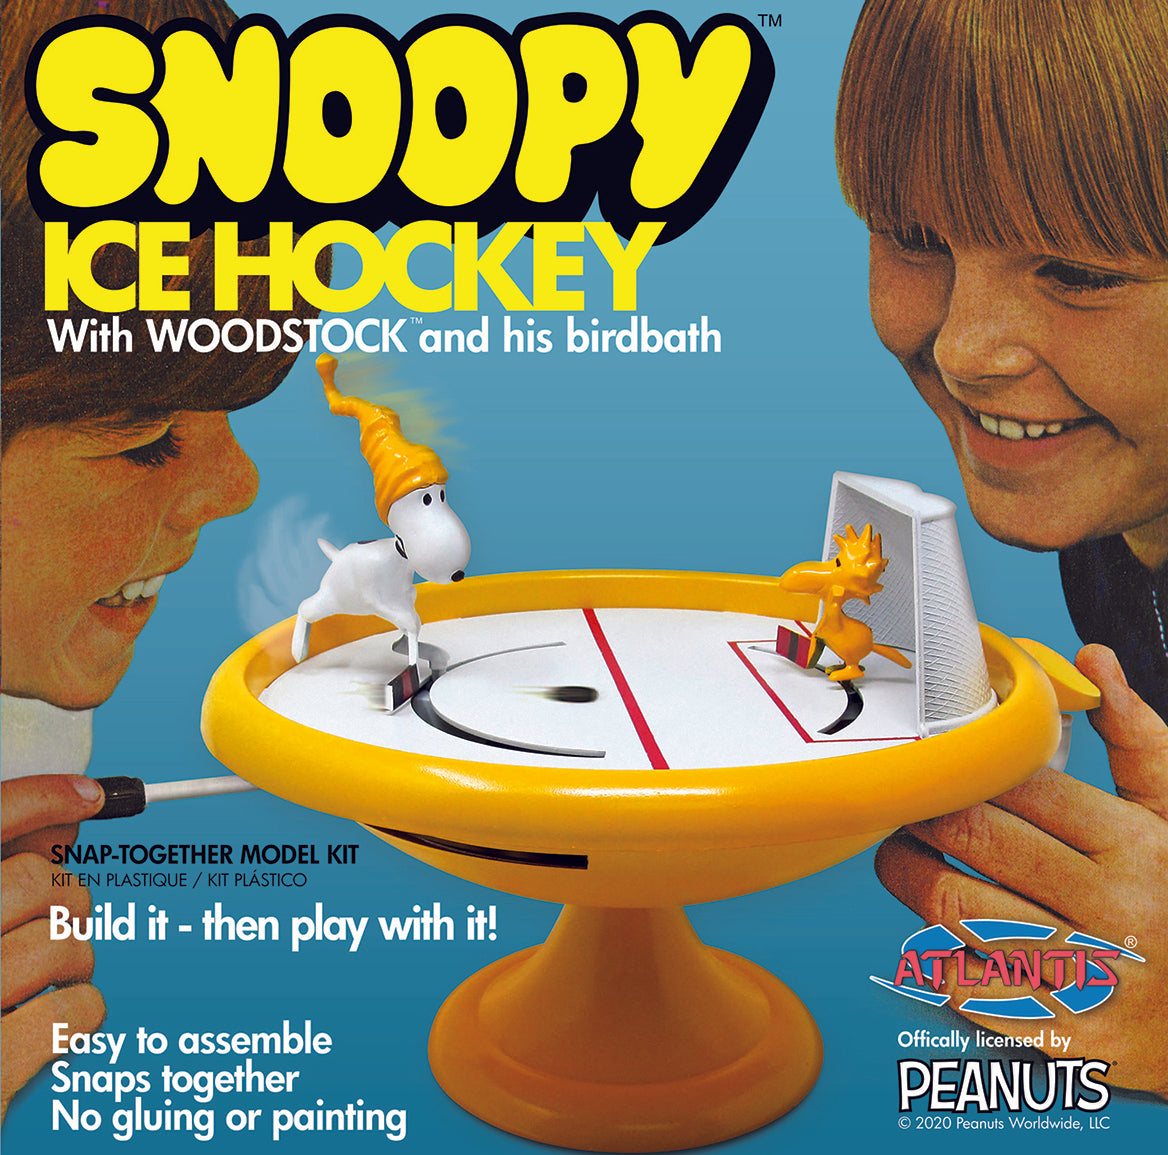 Atlantis Peanuts Snoopy and Woodstock Bird Bath Ice Hockey Game